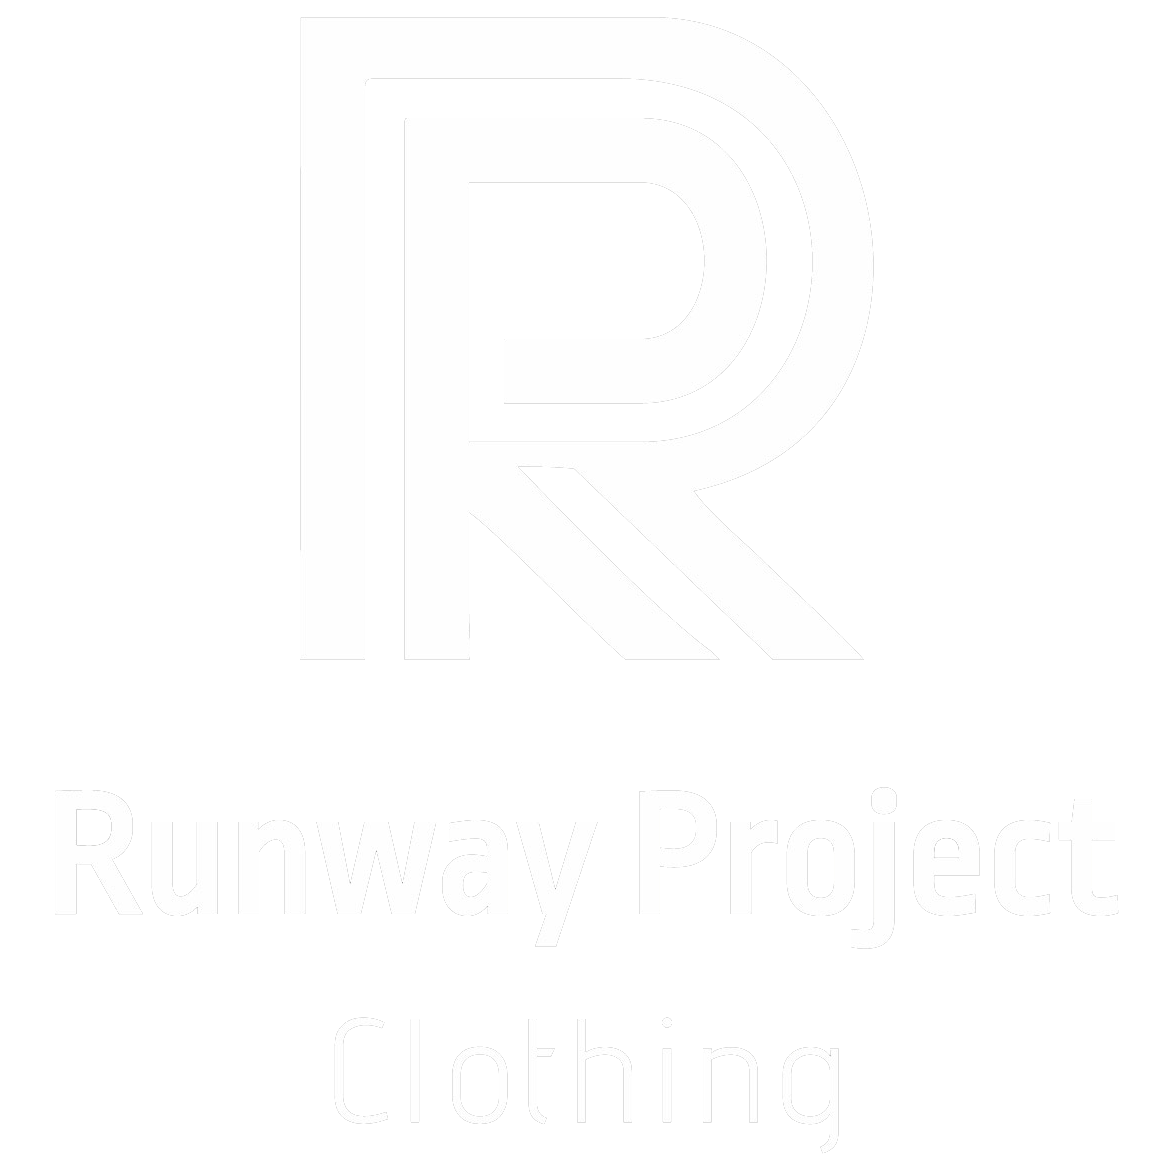 Runway Project